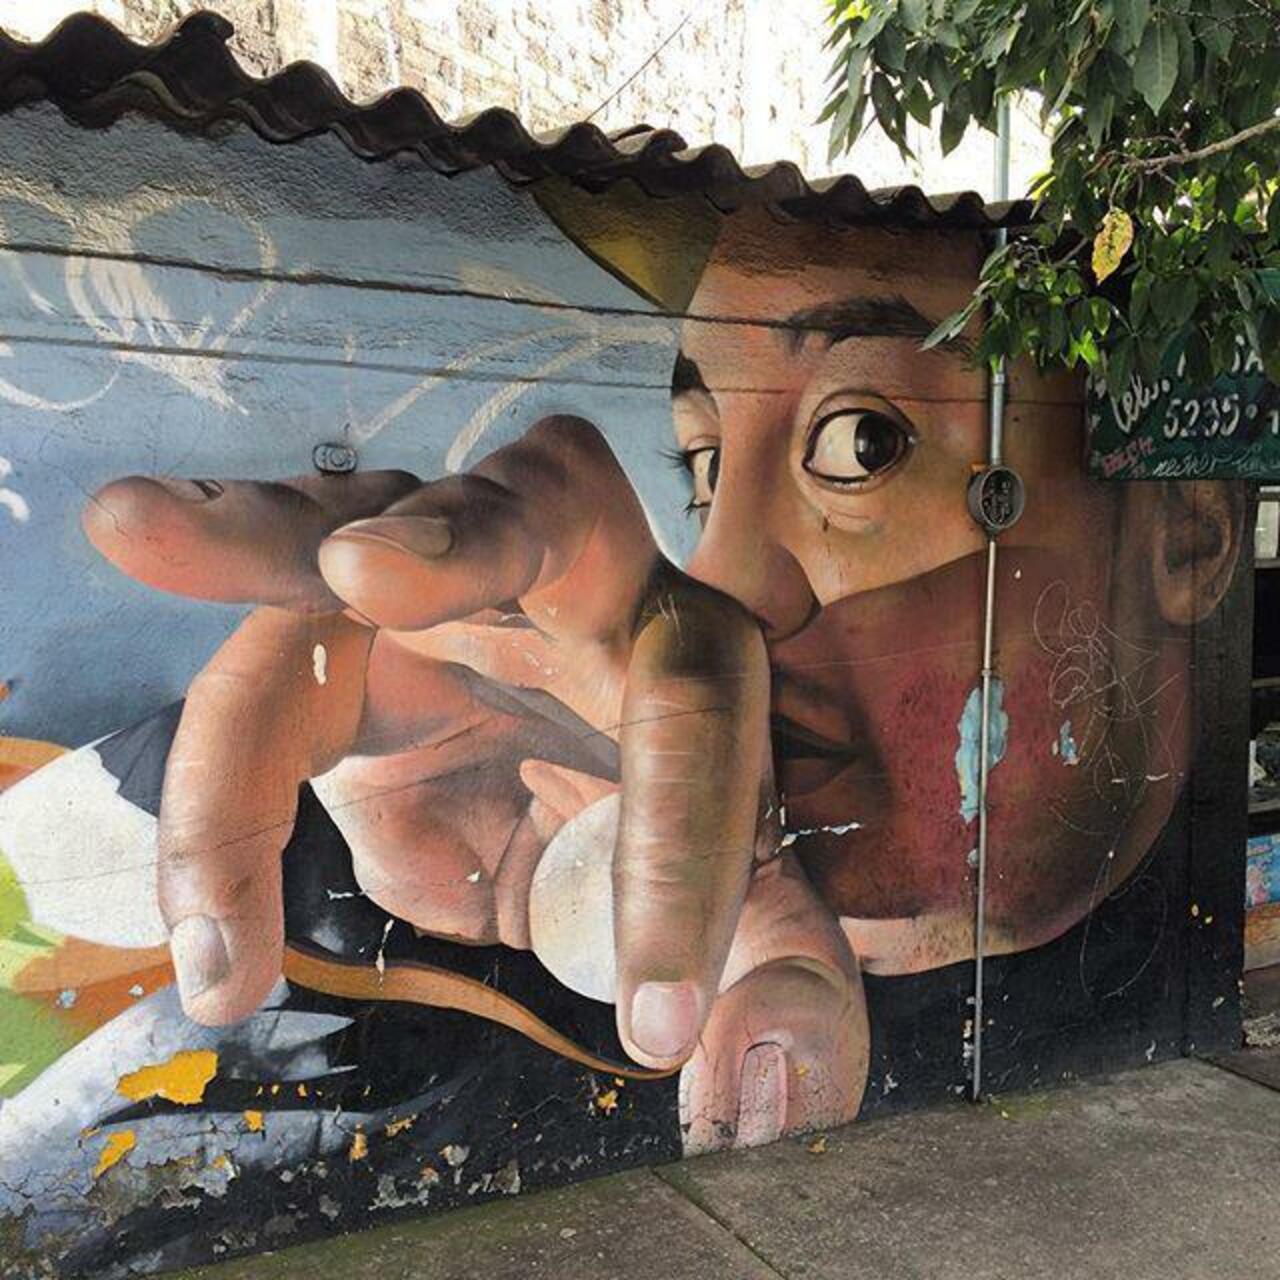 RT @StArtEverywhere: #streetart #arteurbano #urbanart #urban #art #mexico #cdmx #mexicodf #mural #graffiti #streetartmexico #urbanwalls … http://t.co/hBAlcjqju3